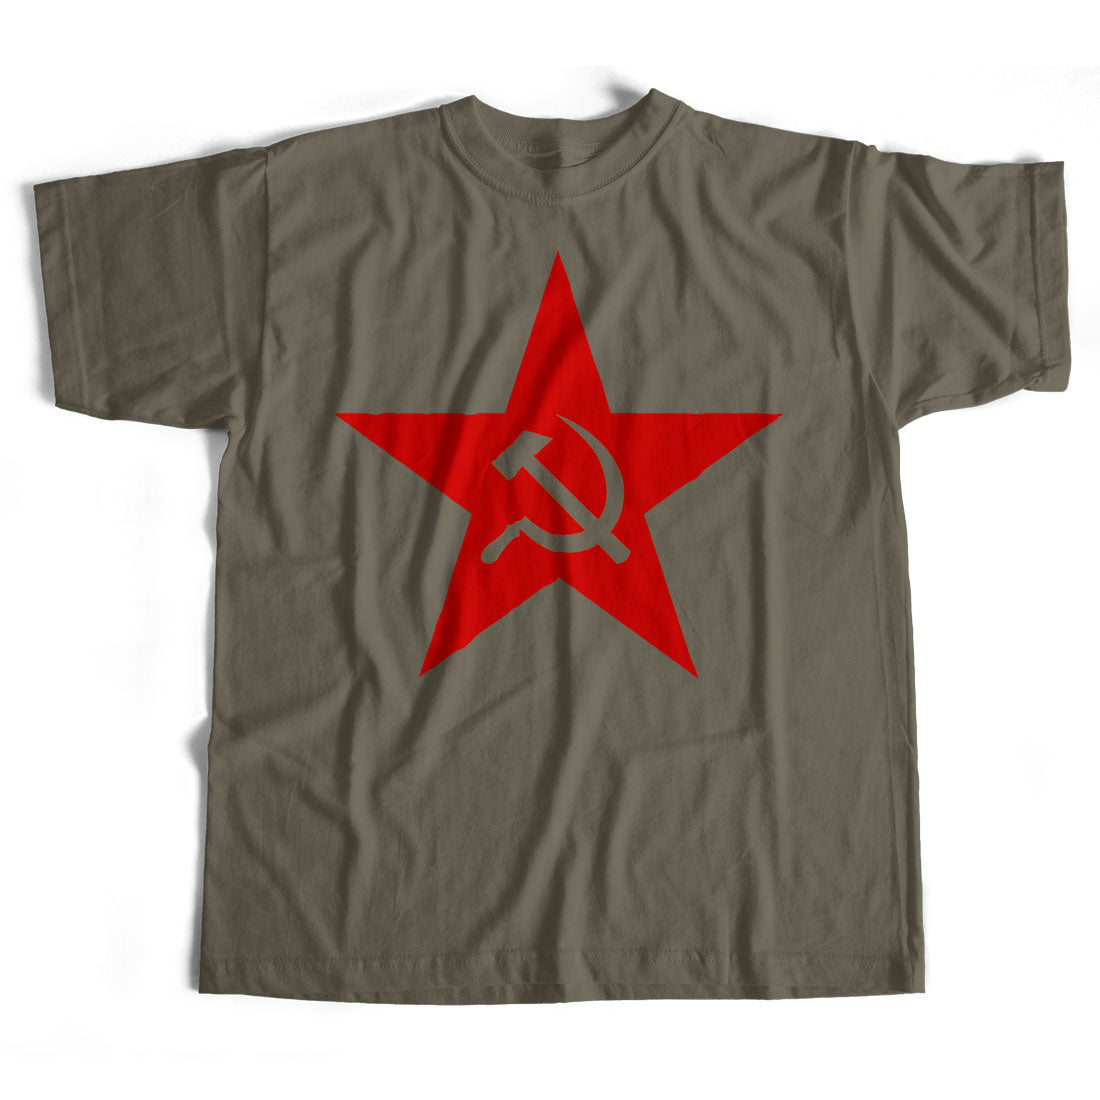 Classic Soviet Communism Cold War T Shirt - Red Army Star